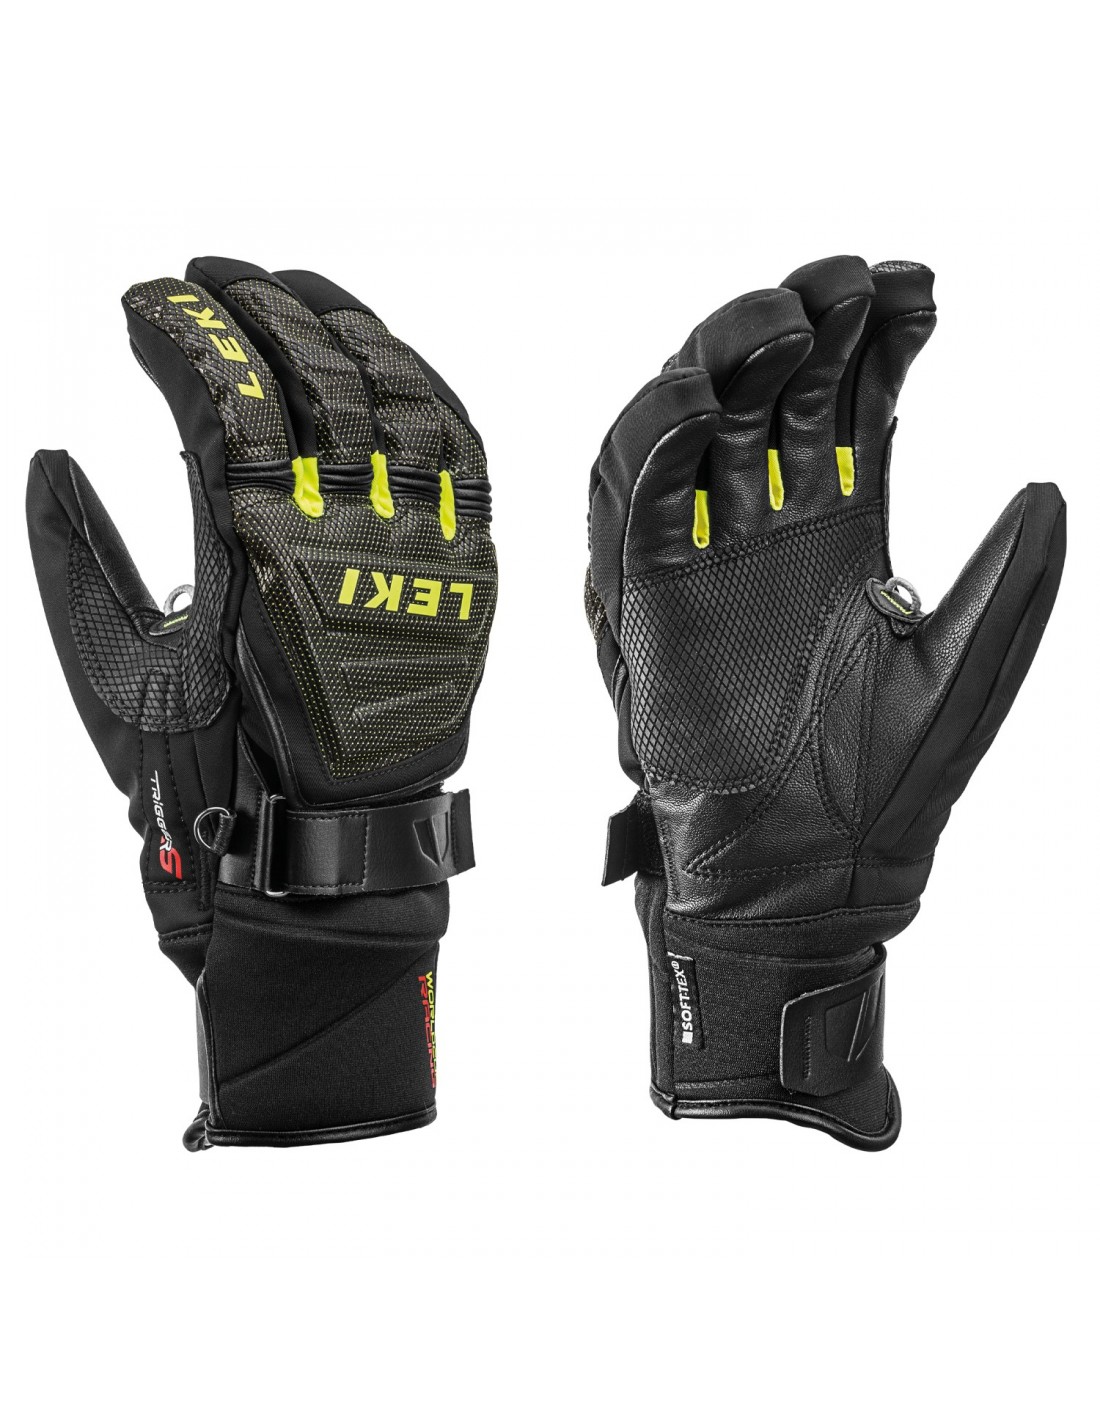 Leki Handschuh Race Coach C-Tech S Handschuhvariante - Handschuhe, Handschuhgröße - 6.5, Handschuhfarbe - Black, von Leki